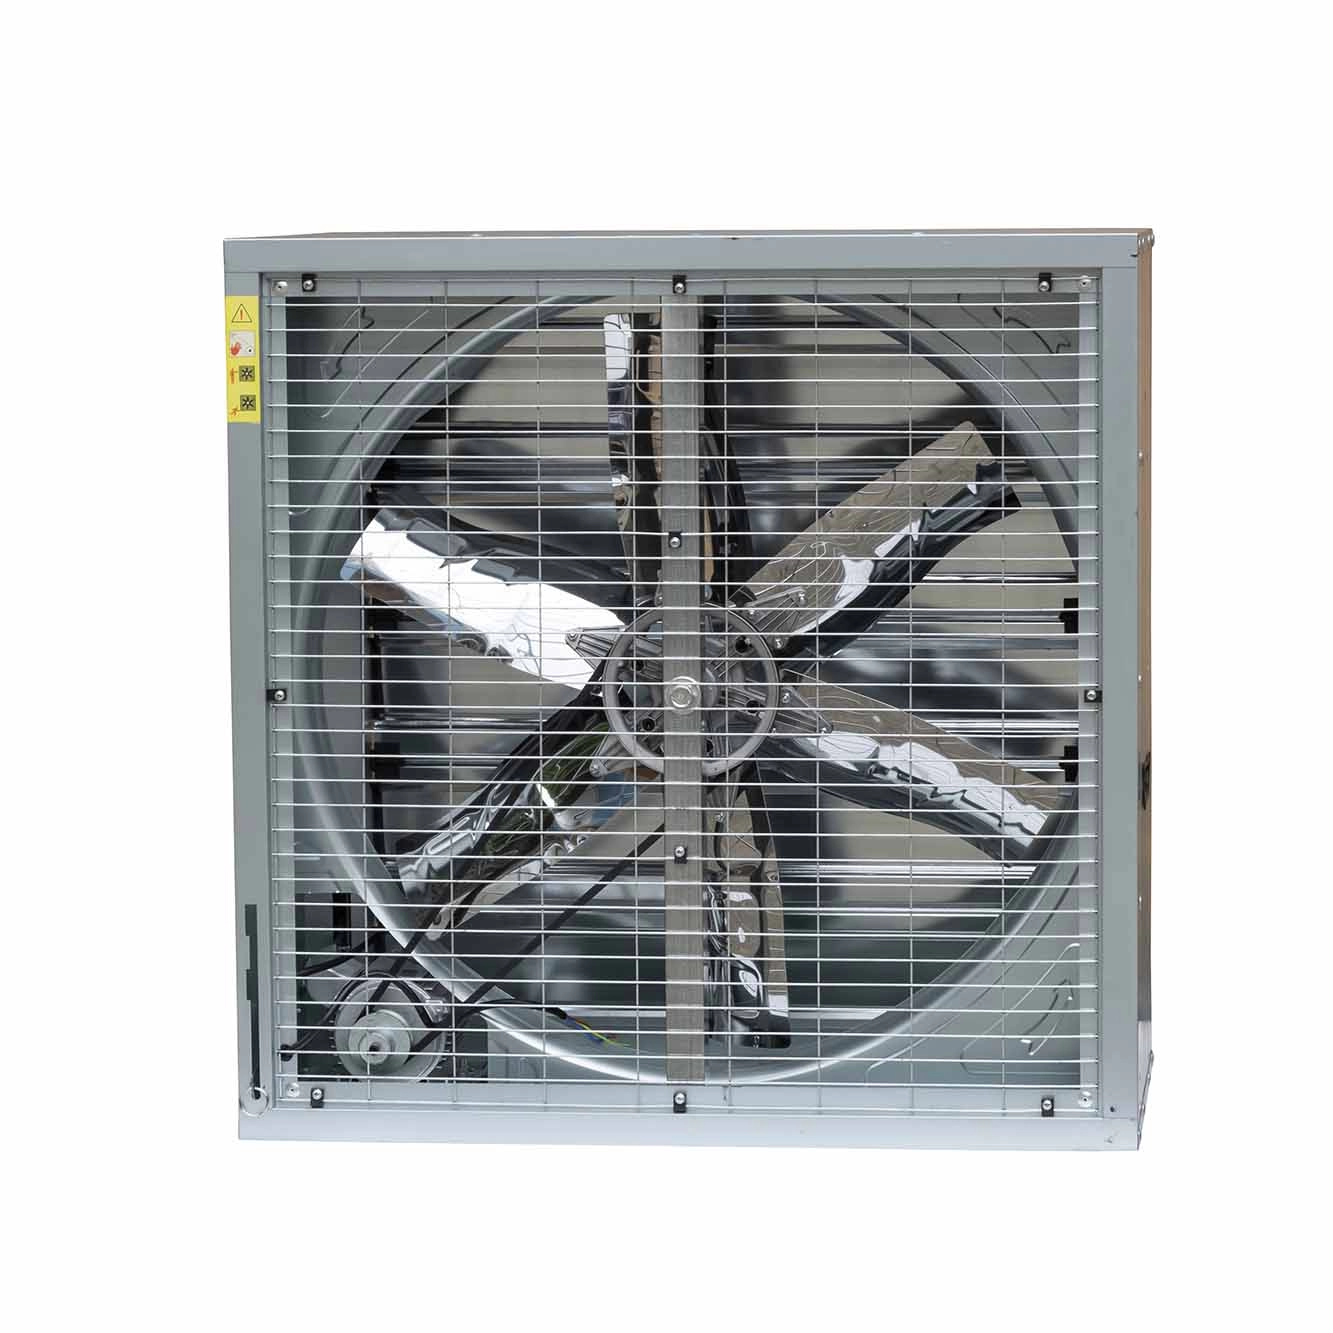 Ventiladores de enfriador de aire por evaporación de escape industrial Ventiladores de escape de garaje de China Fabricantes de ventiladores de escape agrícolas